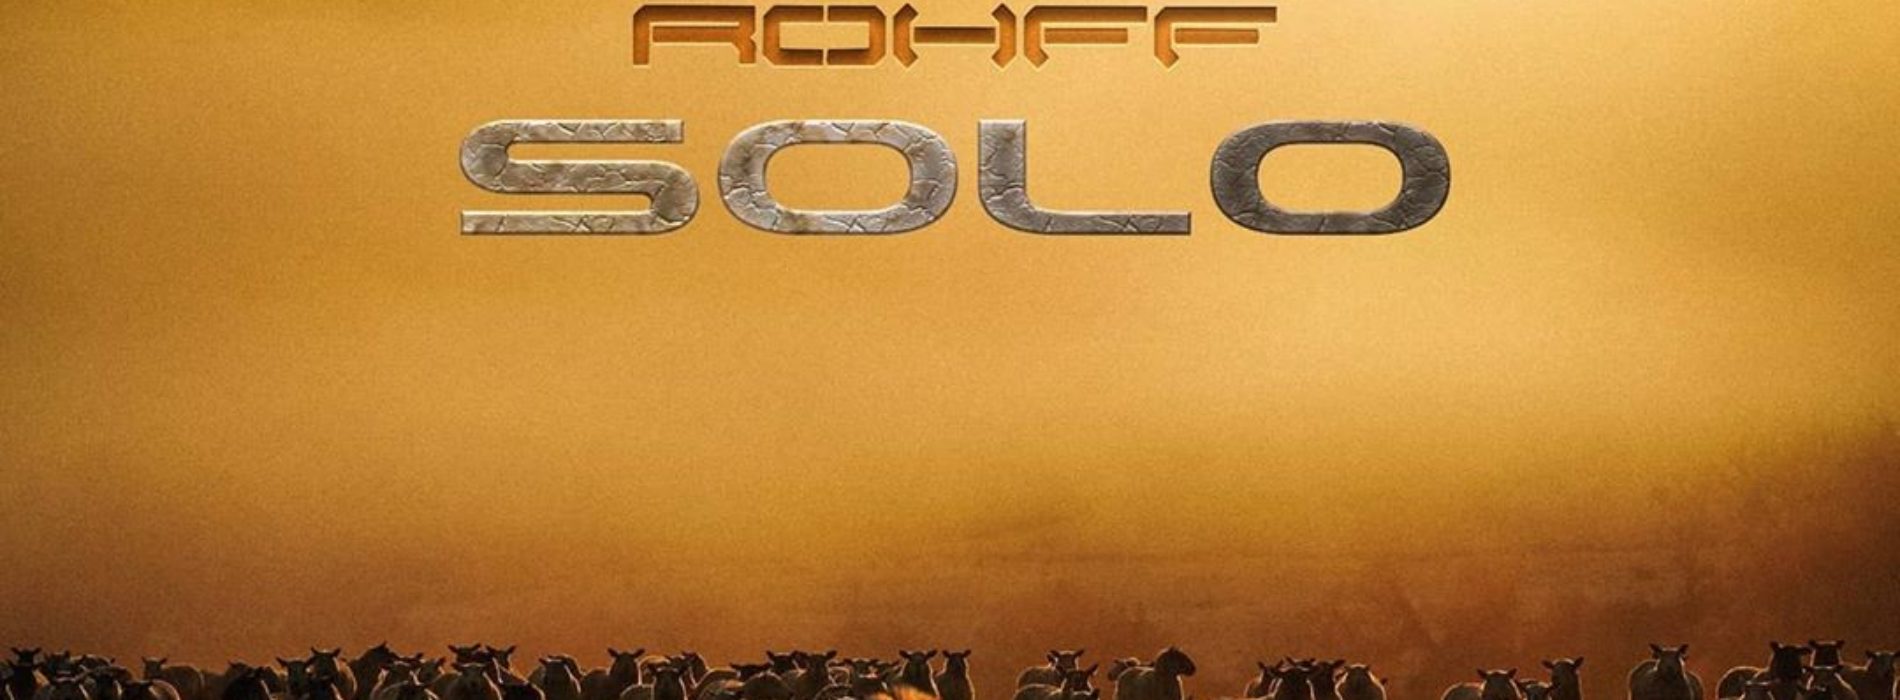 Rohff – Solo [Clip officiel] – Août 2020